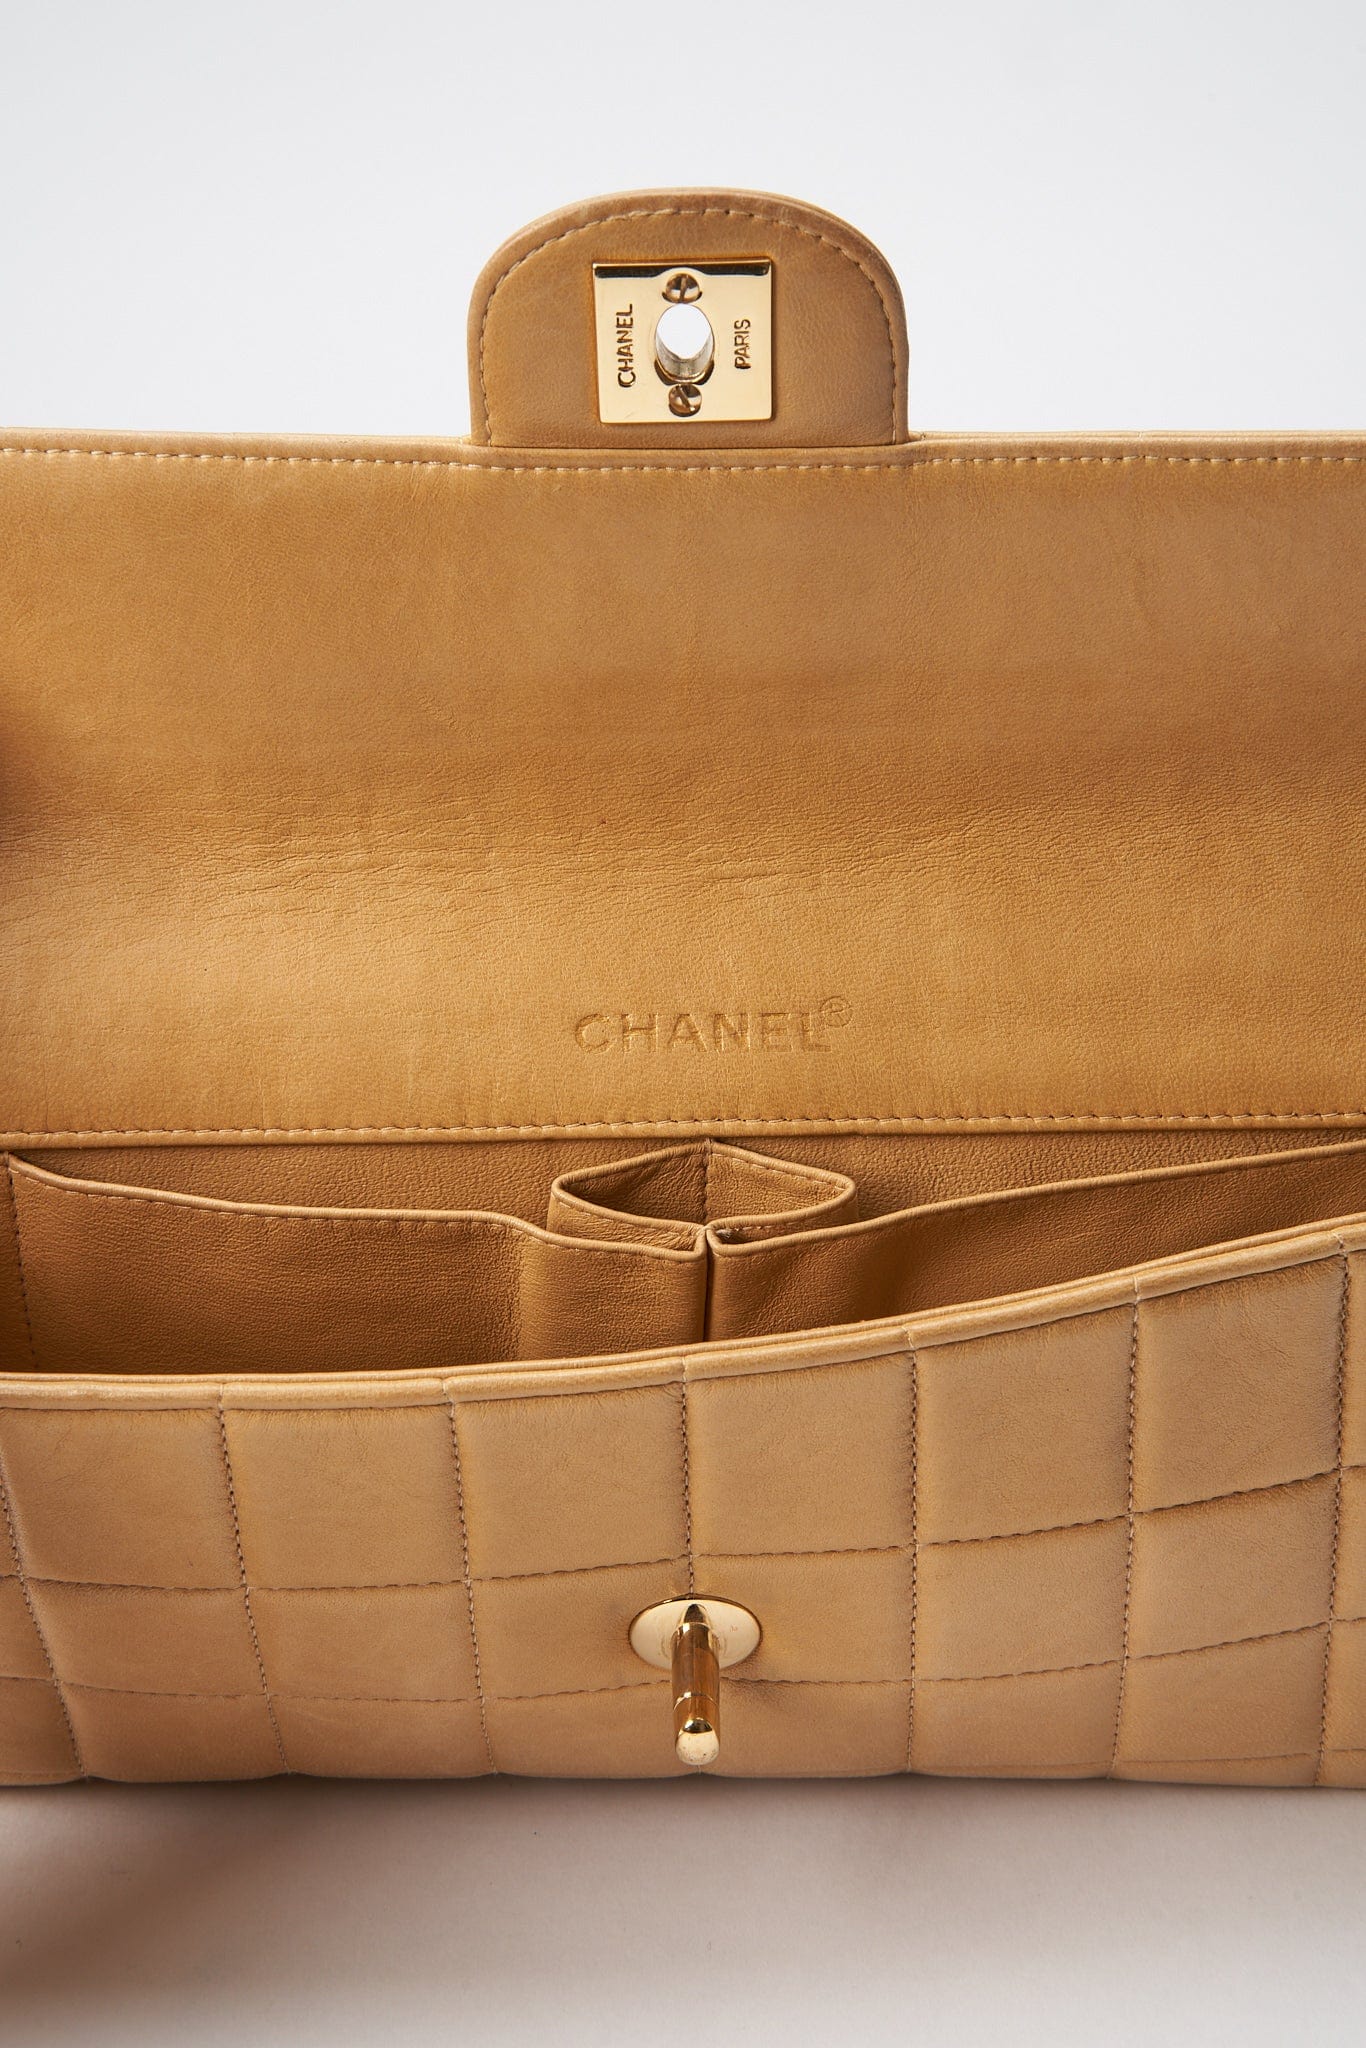 Chanel Chocolate Bar Bag - Beige Leather – The Hosta